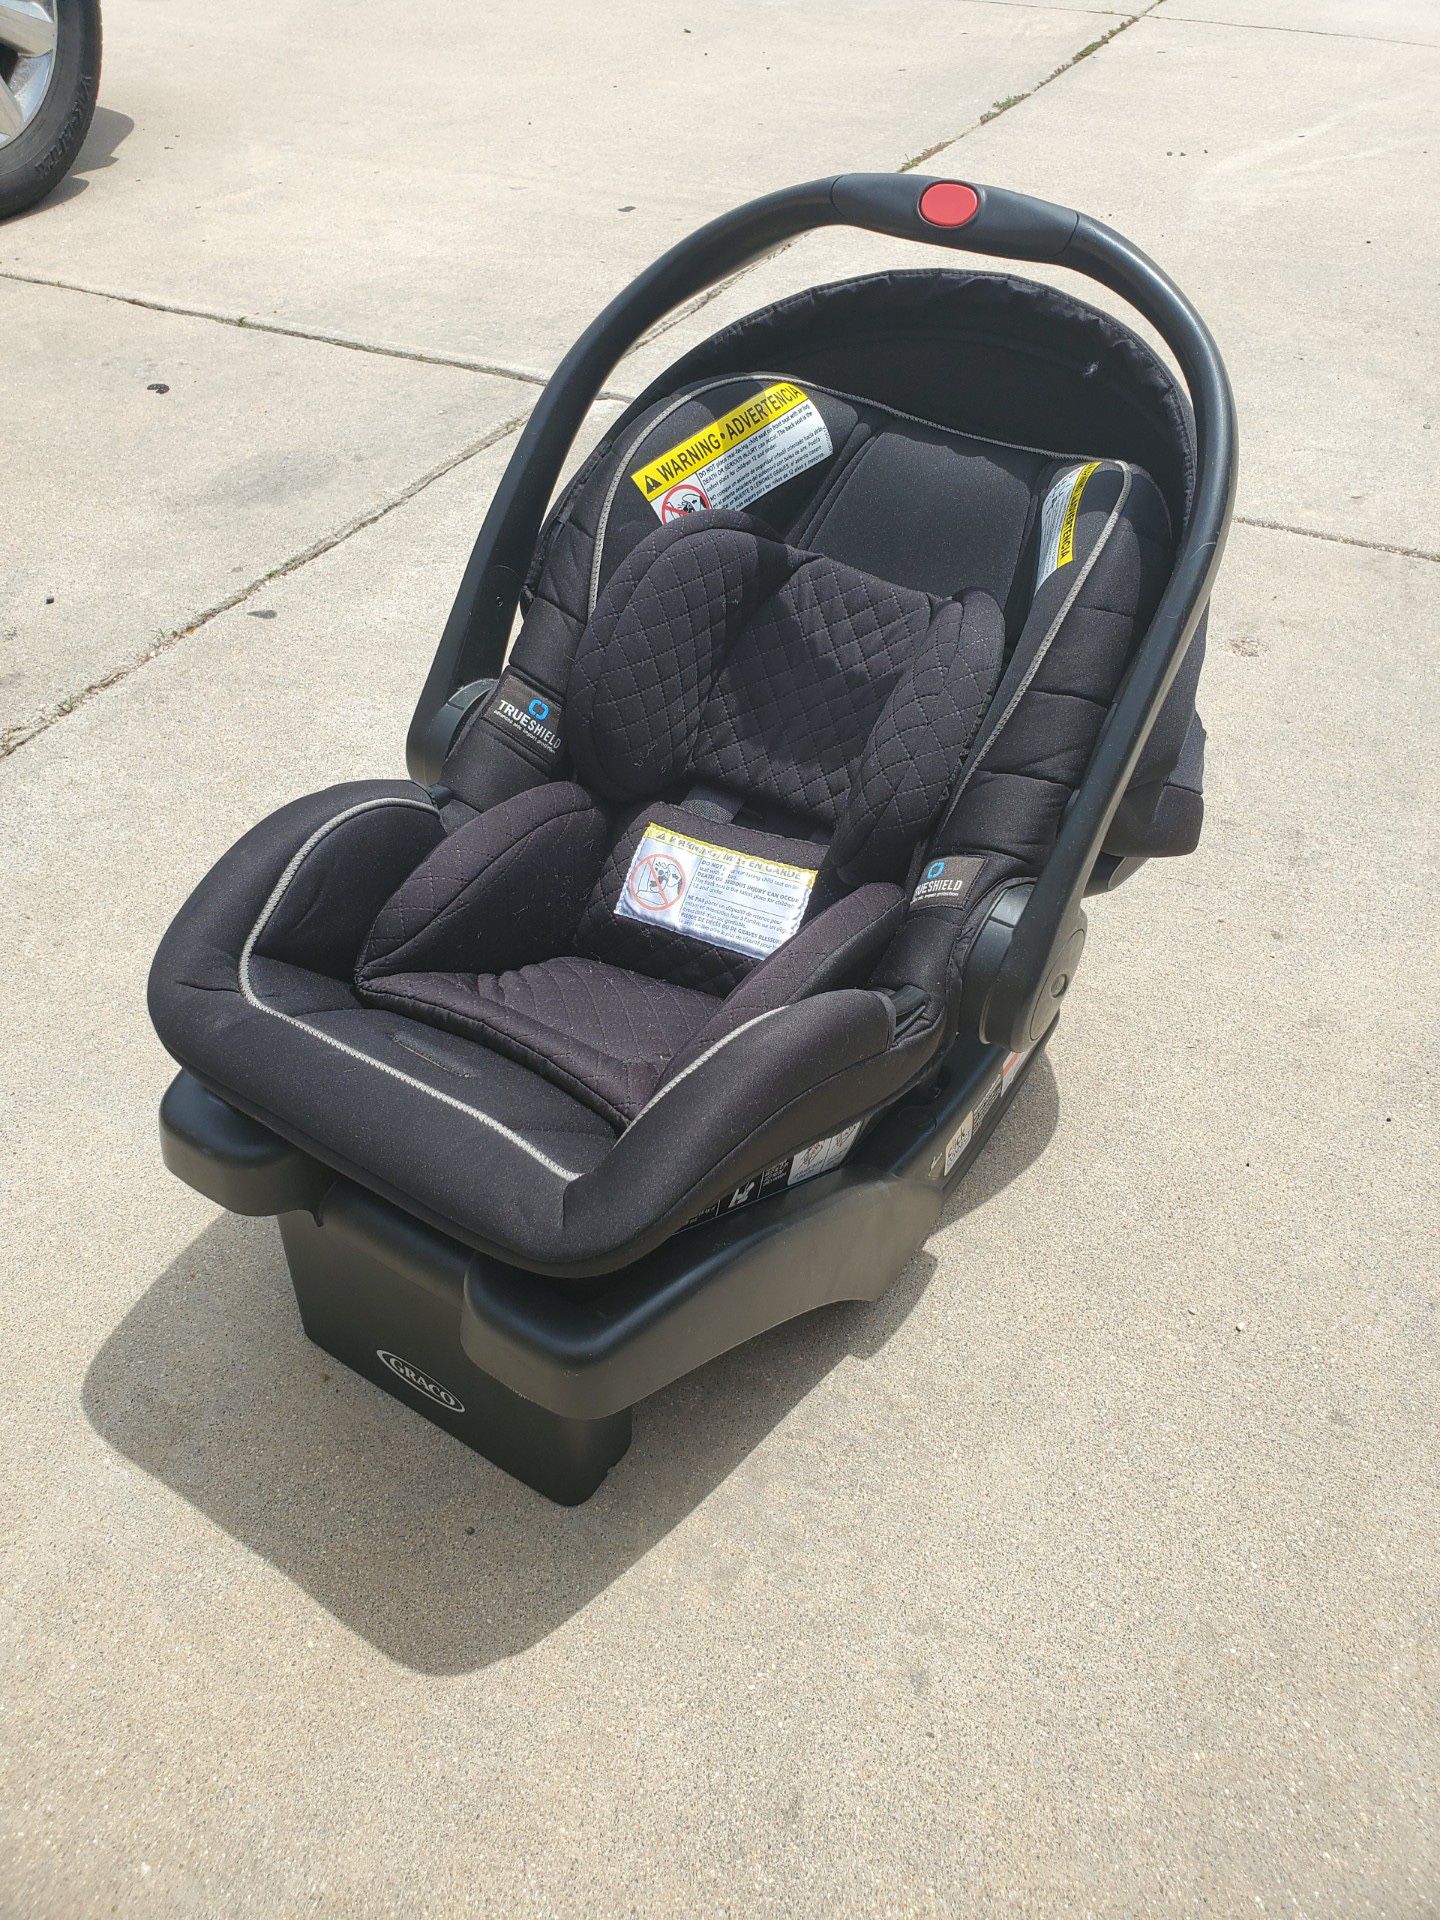 Baby infant car seat snug fit